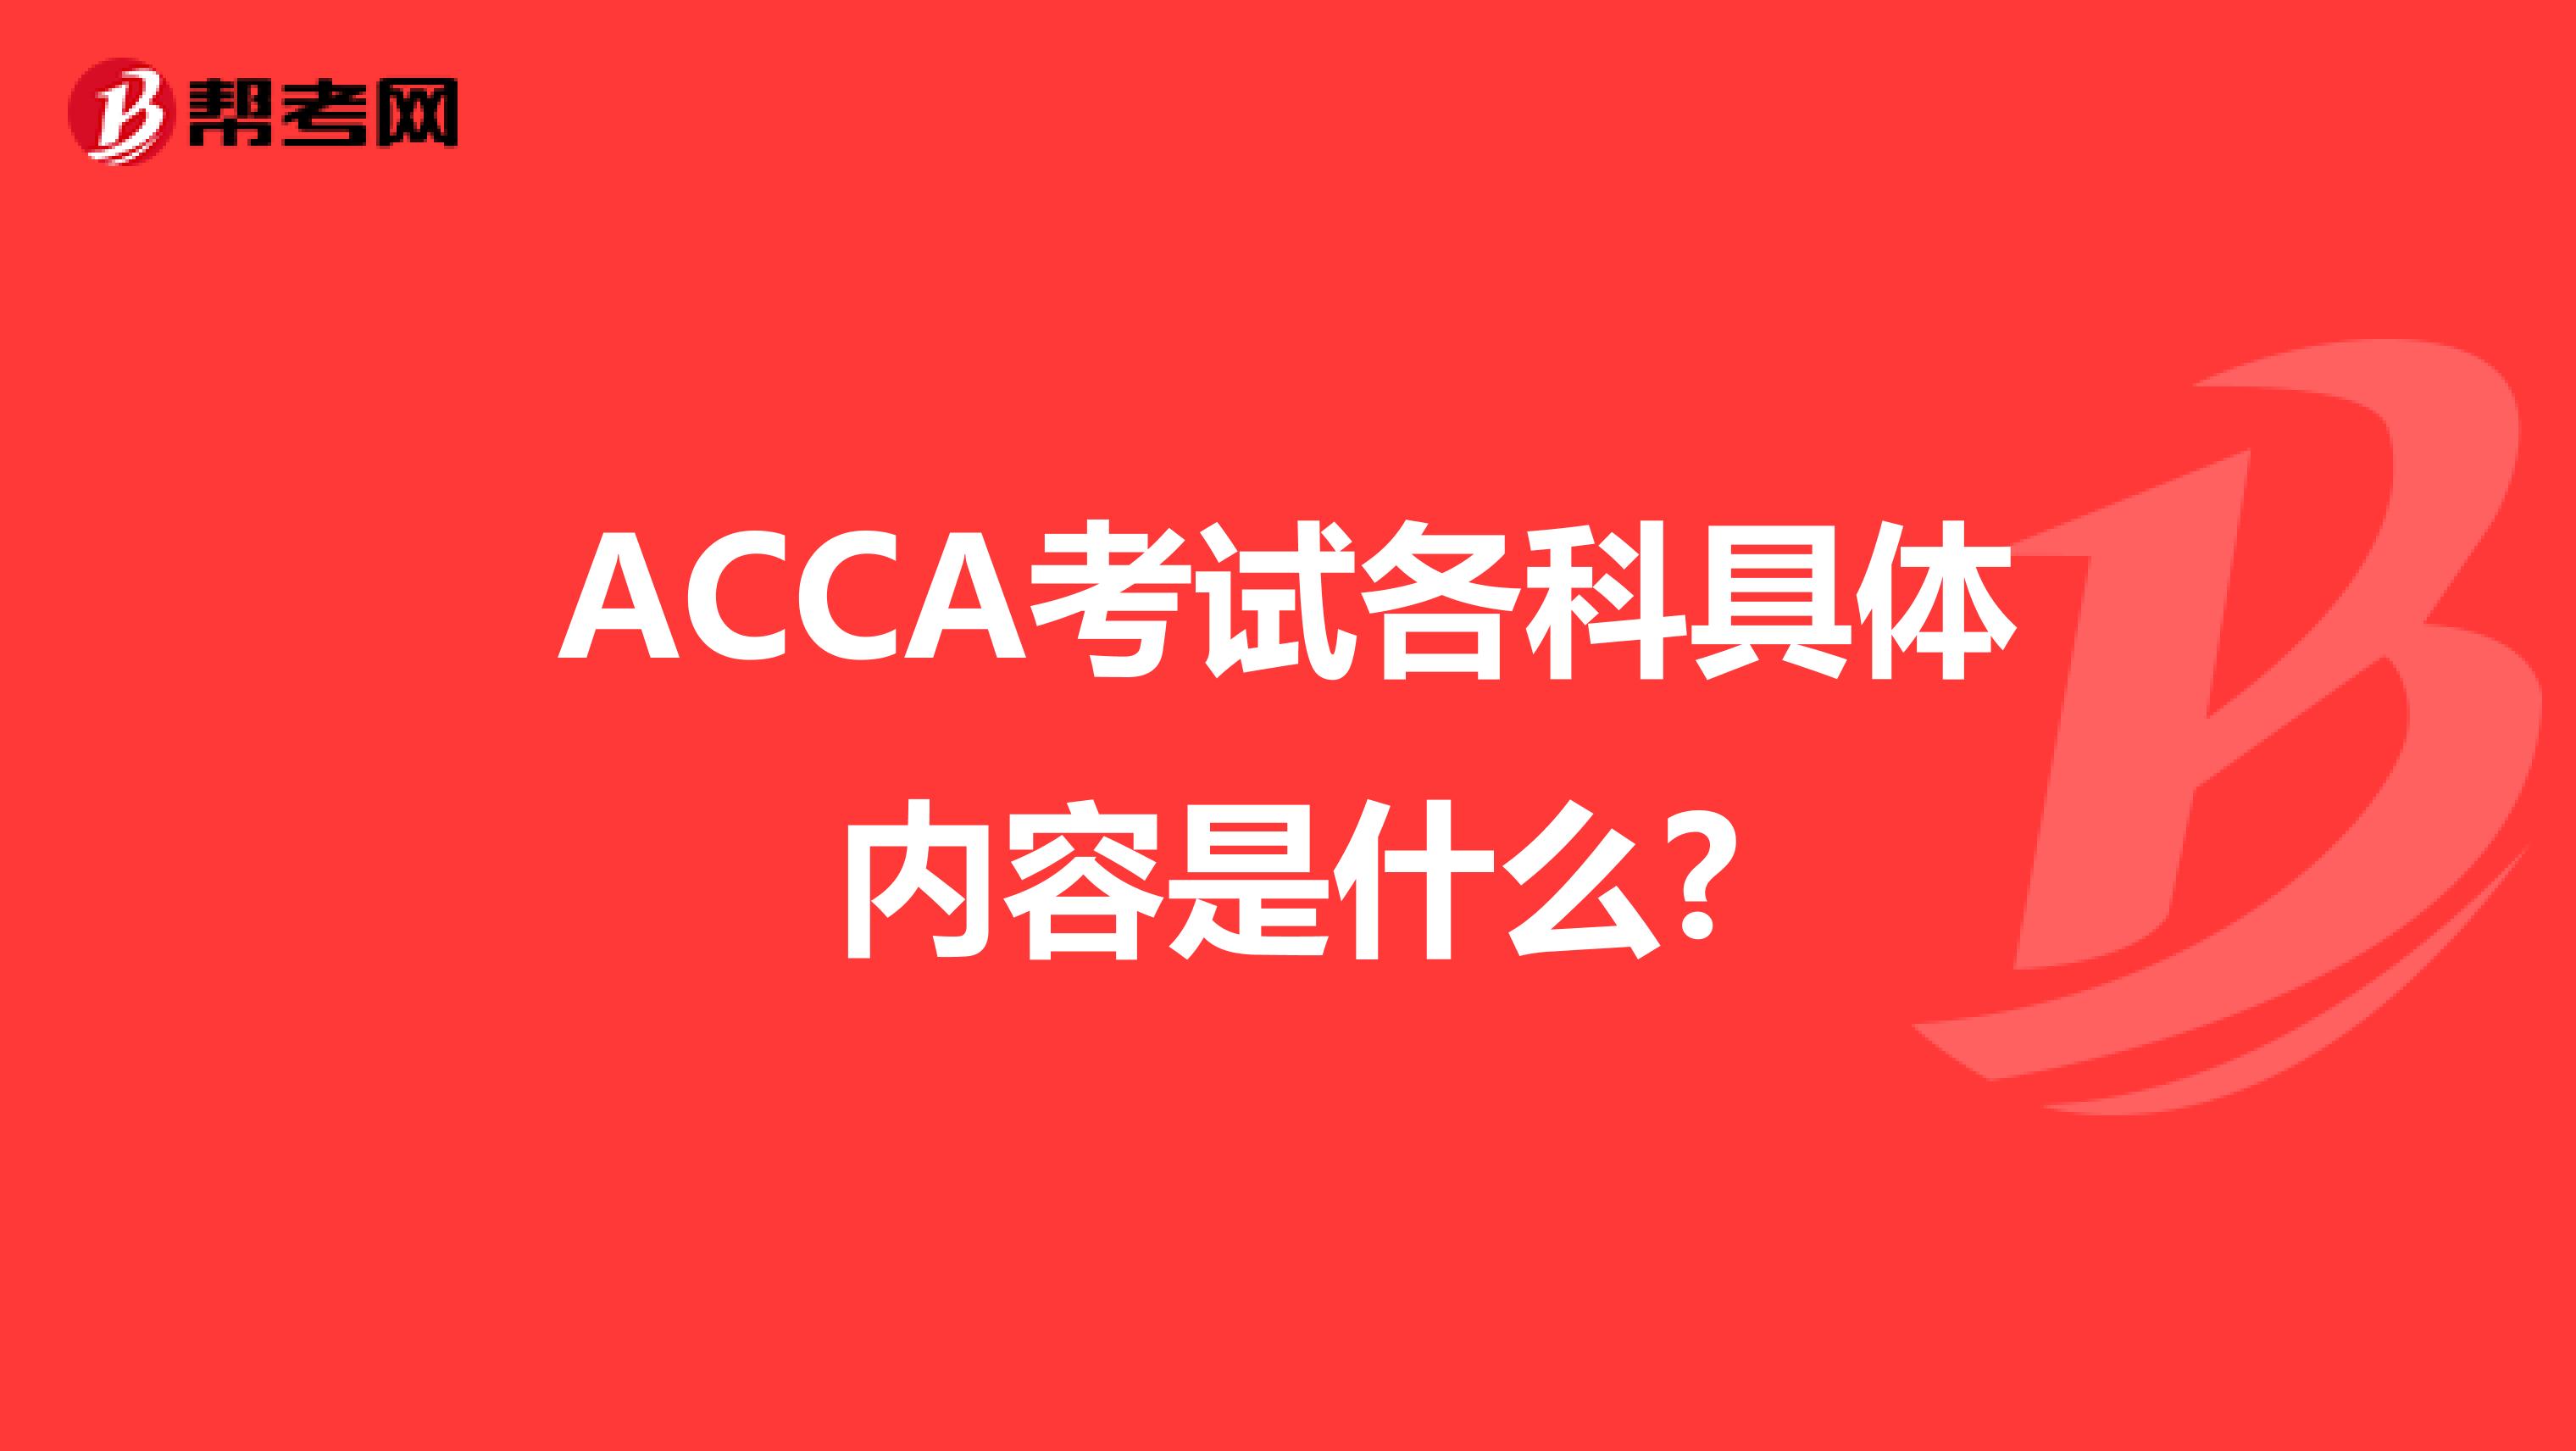 ACCA考试各科具体内容是什么?